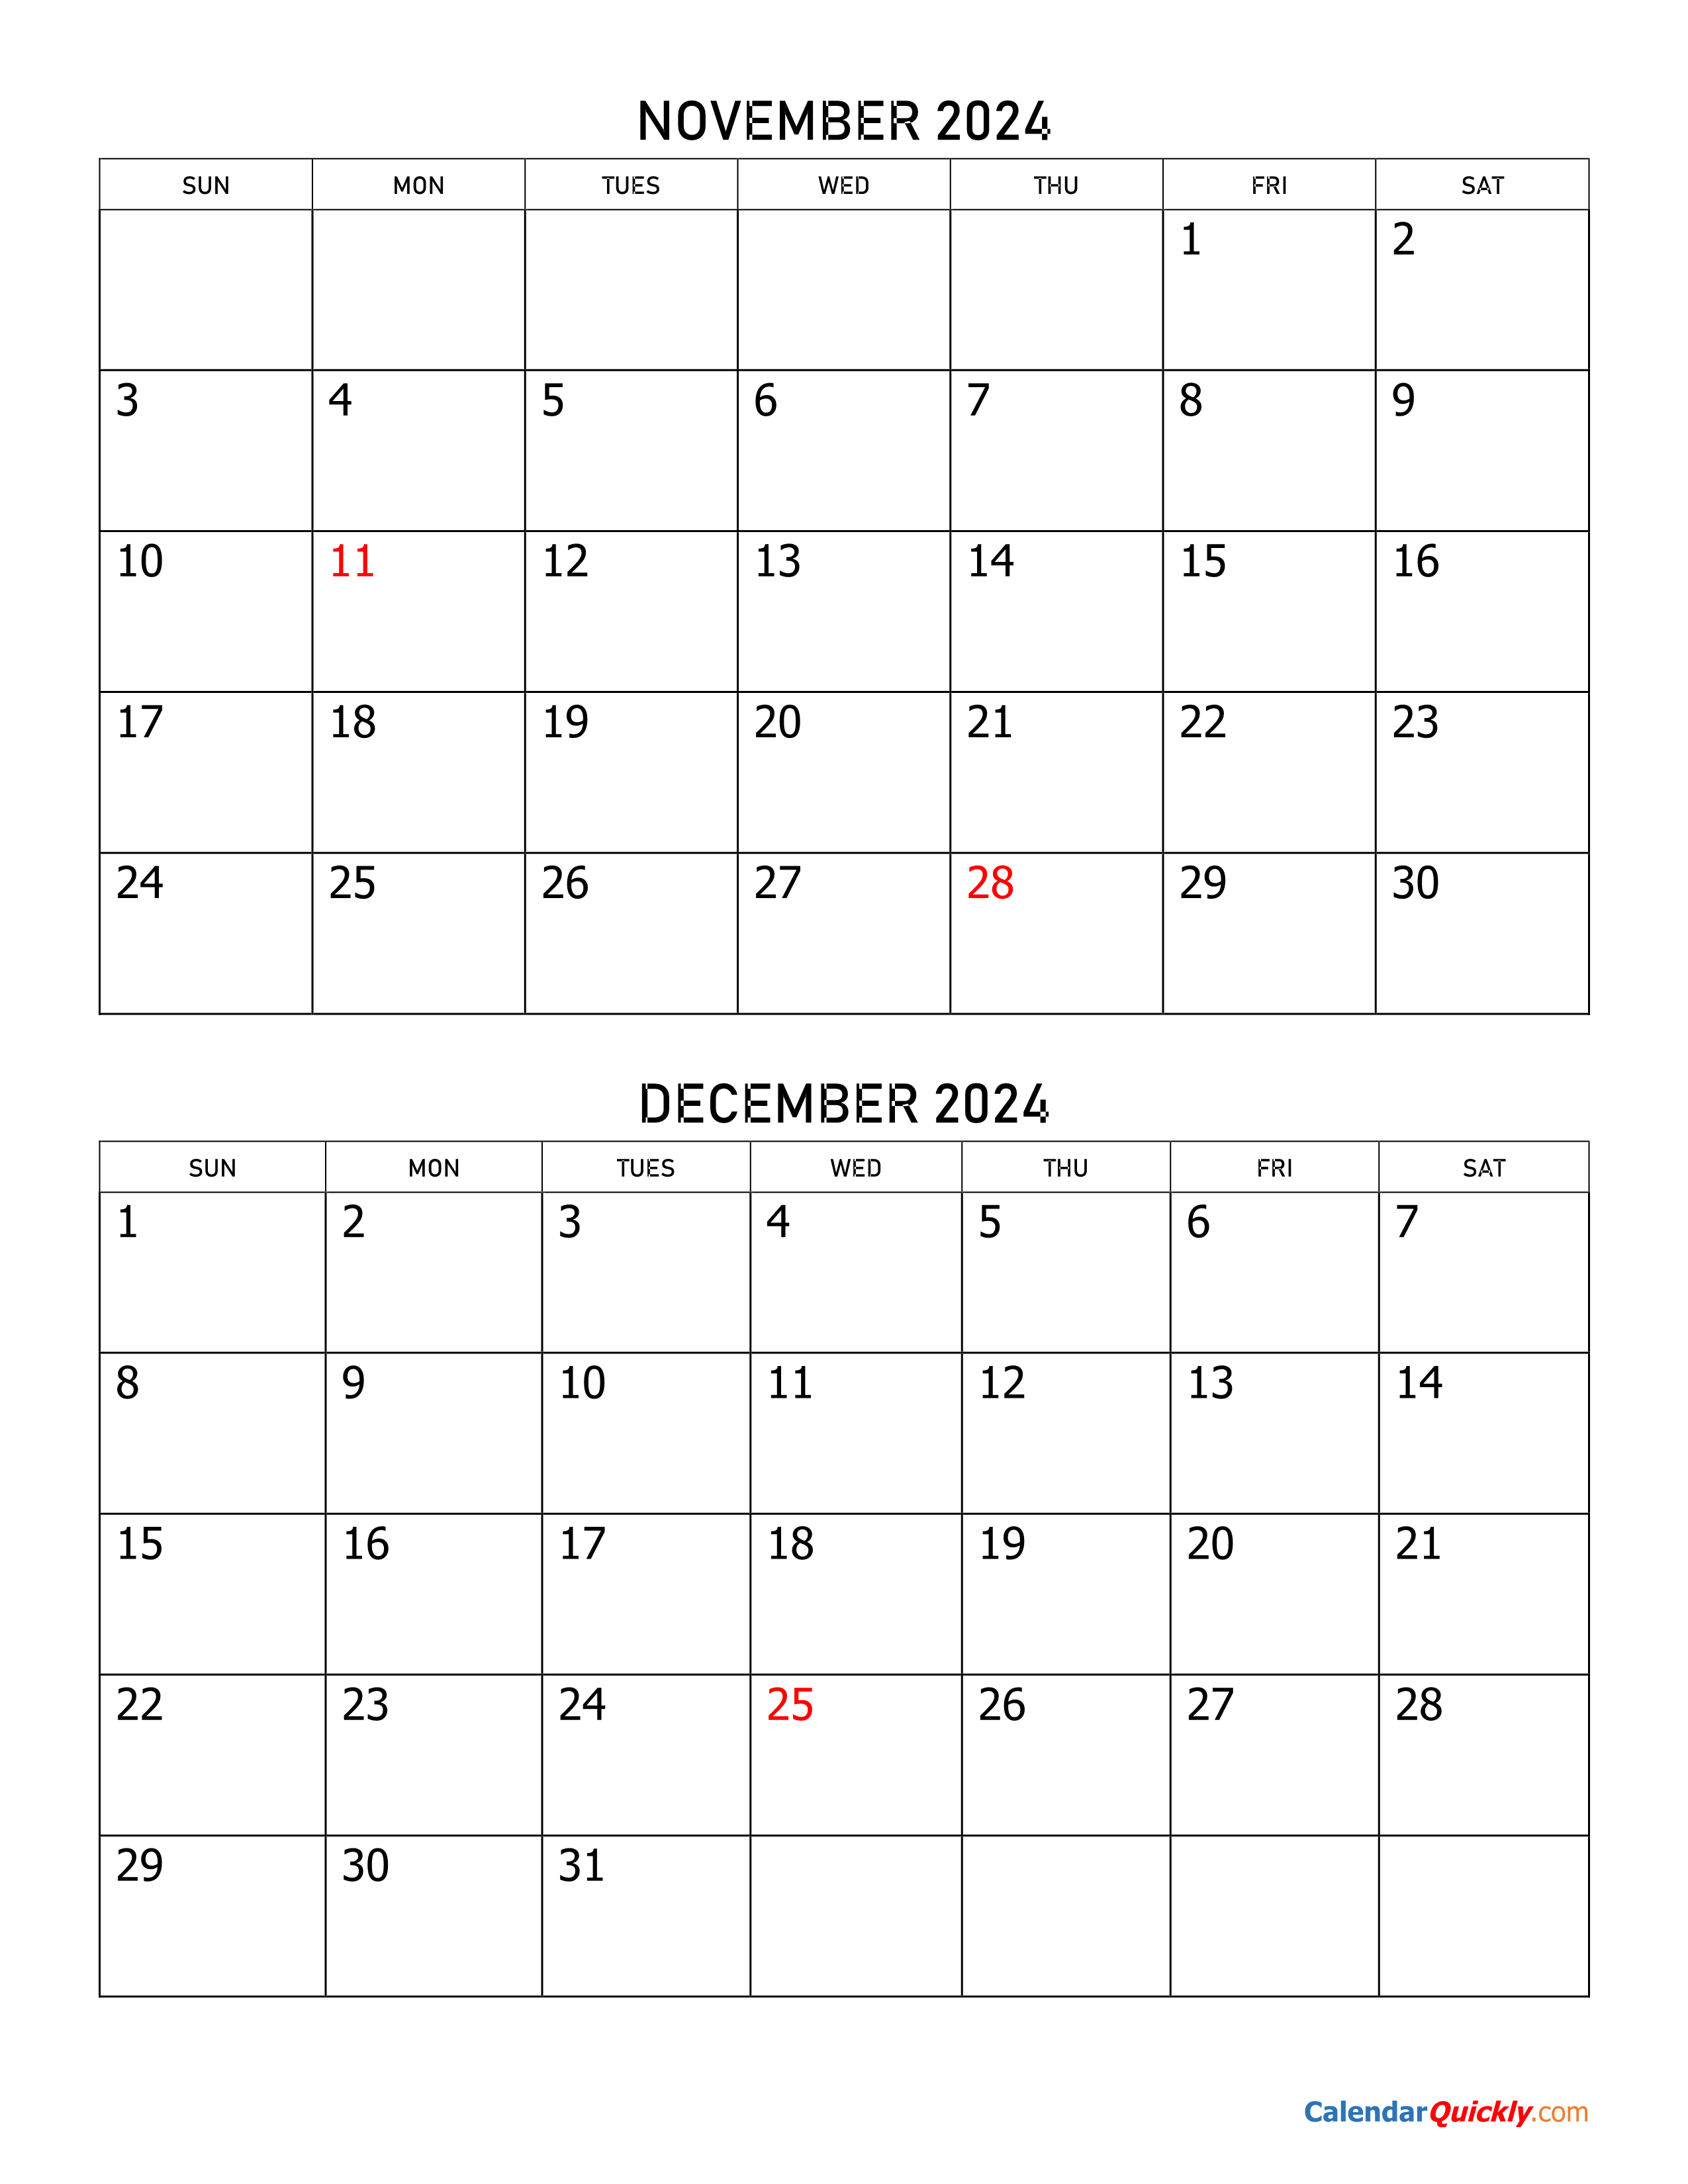 November and December 2024 Calendar Calendar Quickly